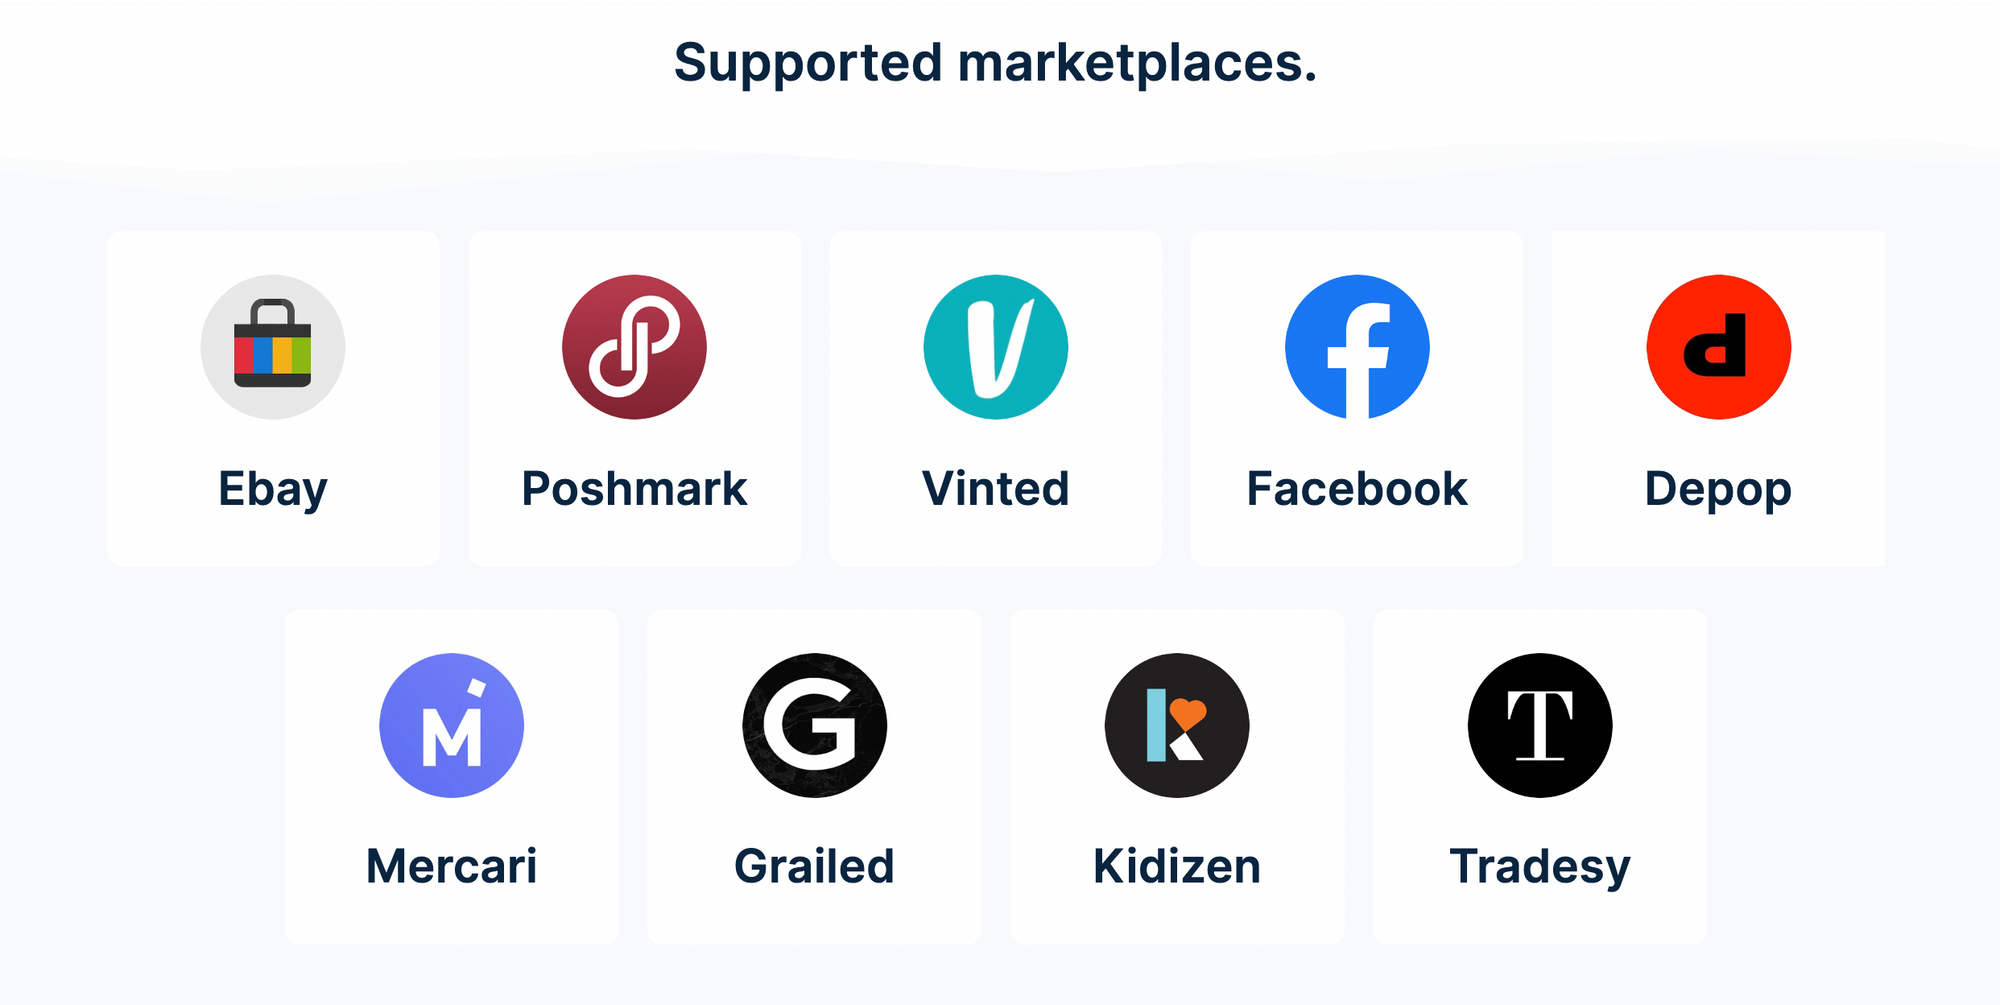 CrossList supports nine different marketplaces